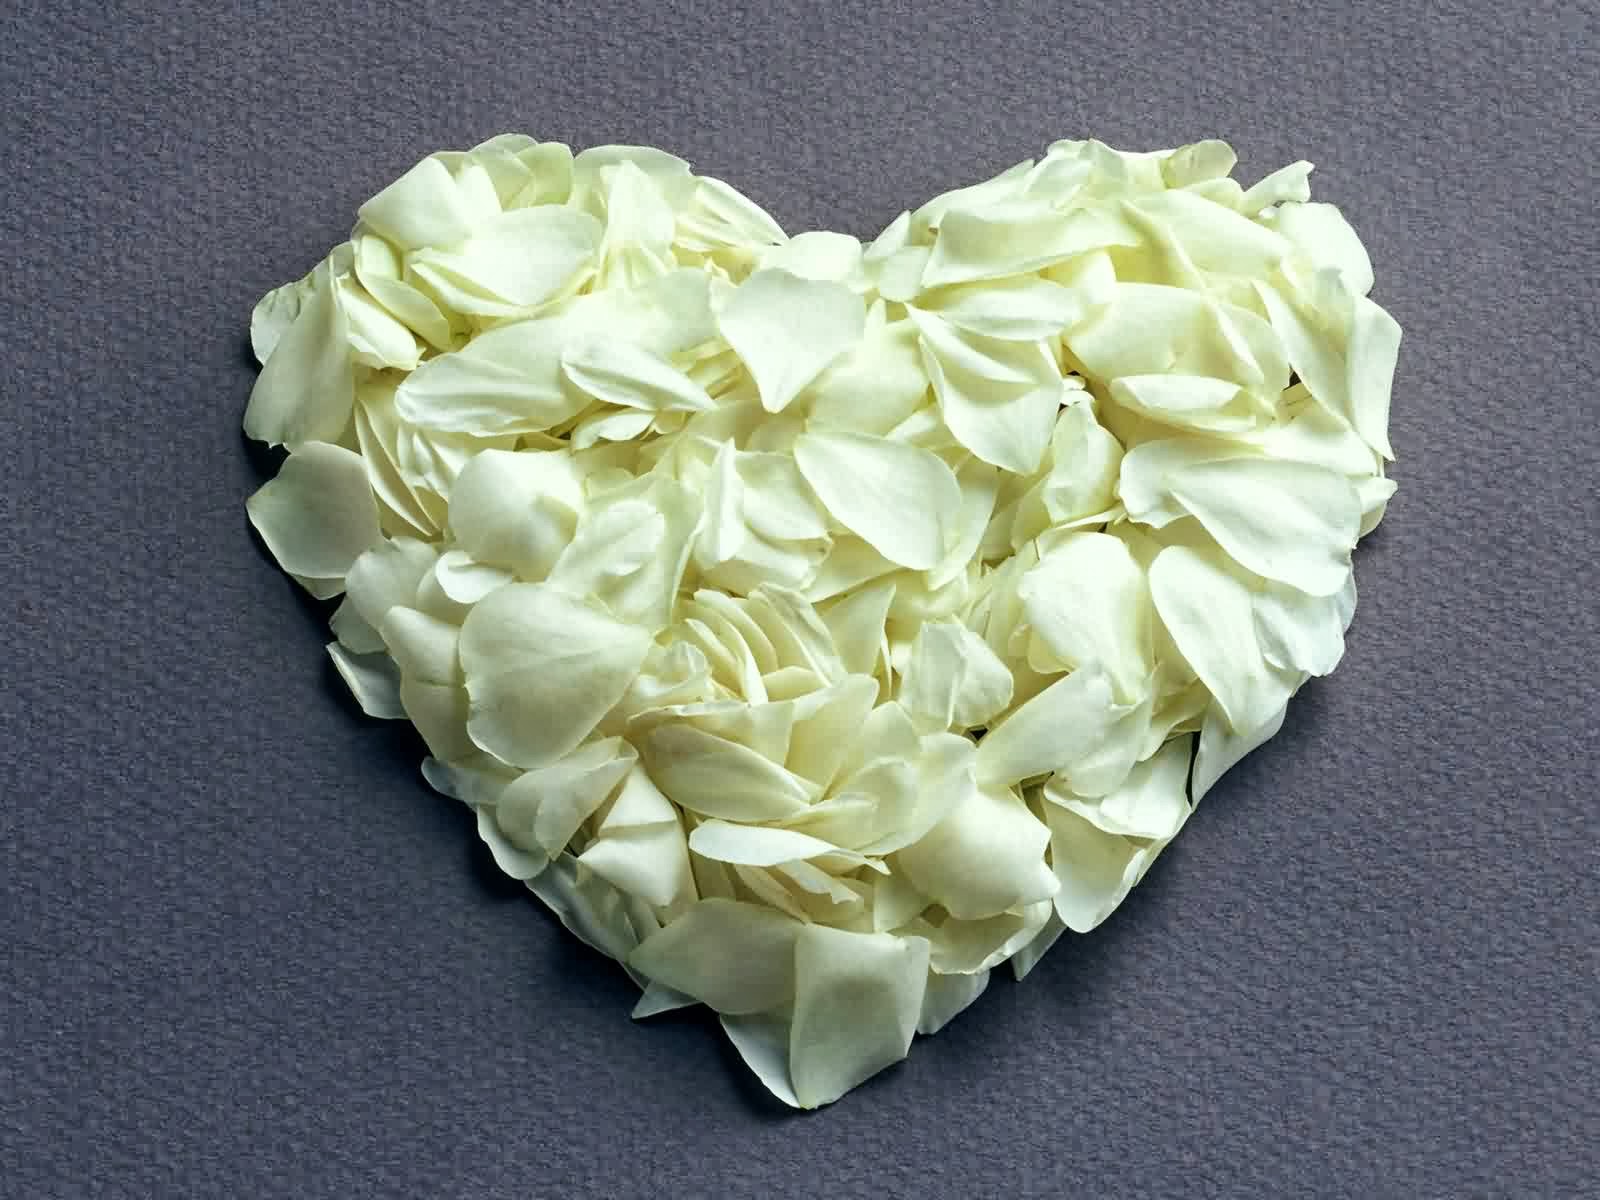 Kumpulan Gambar  Bunga  Mawar  Putih  yang Cantik  Indah Blog 